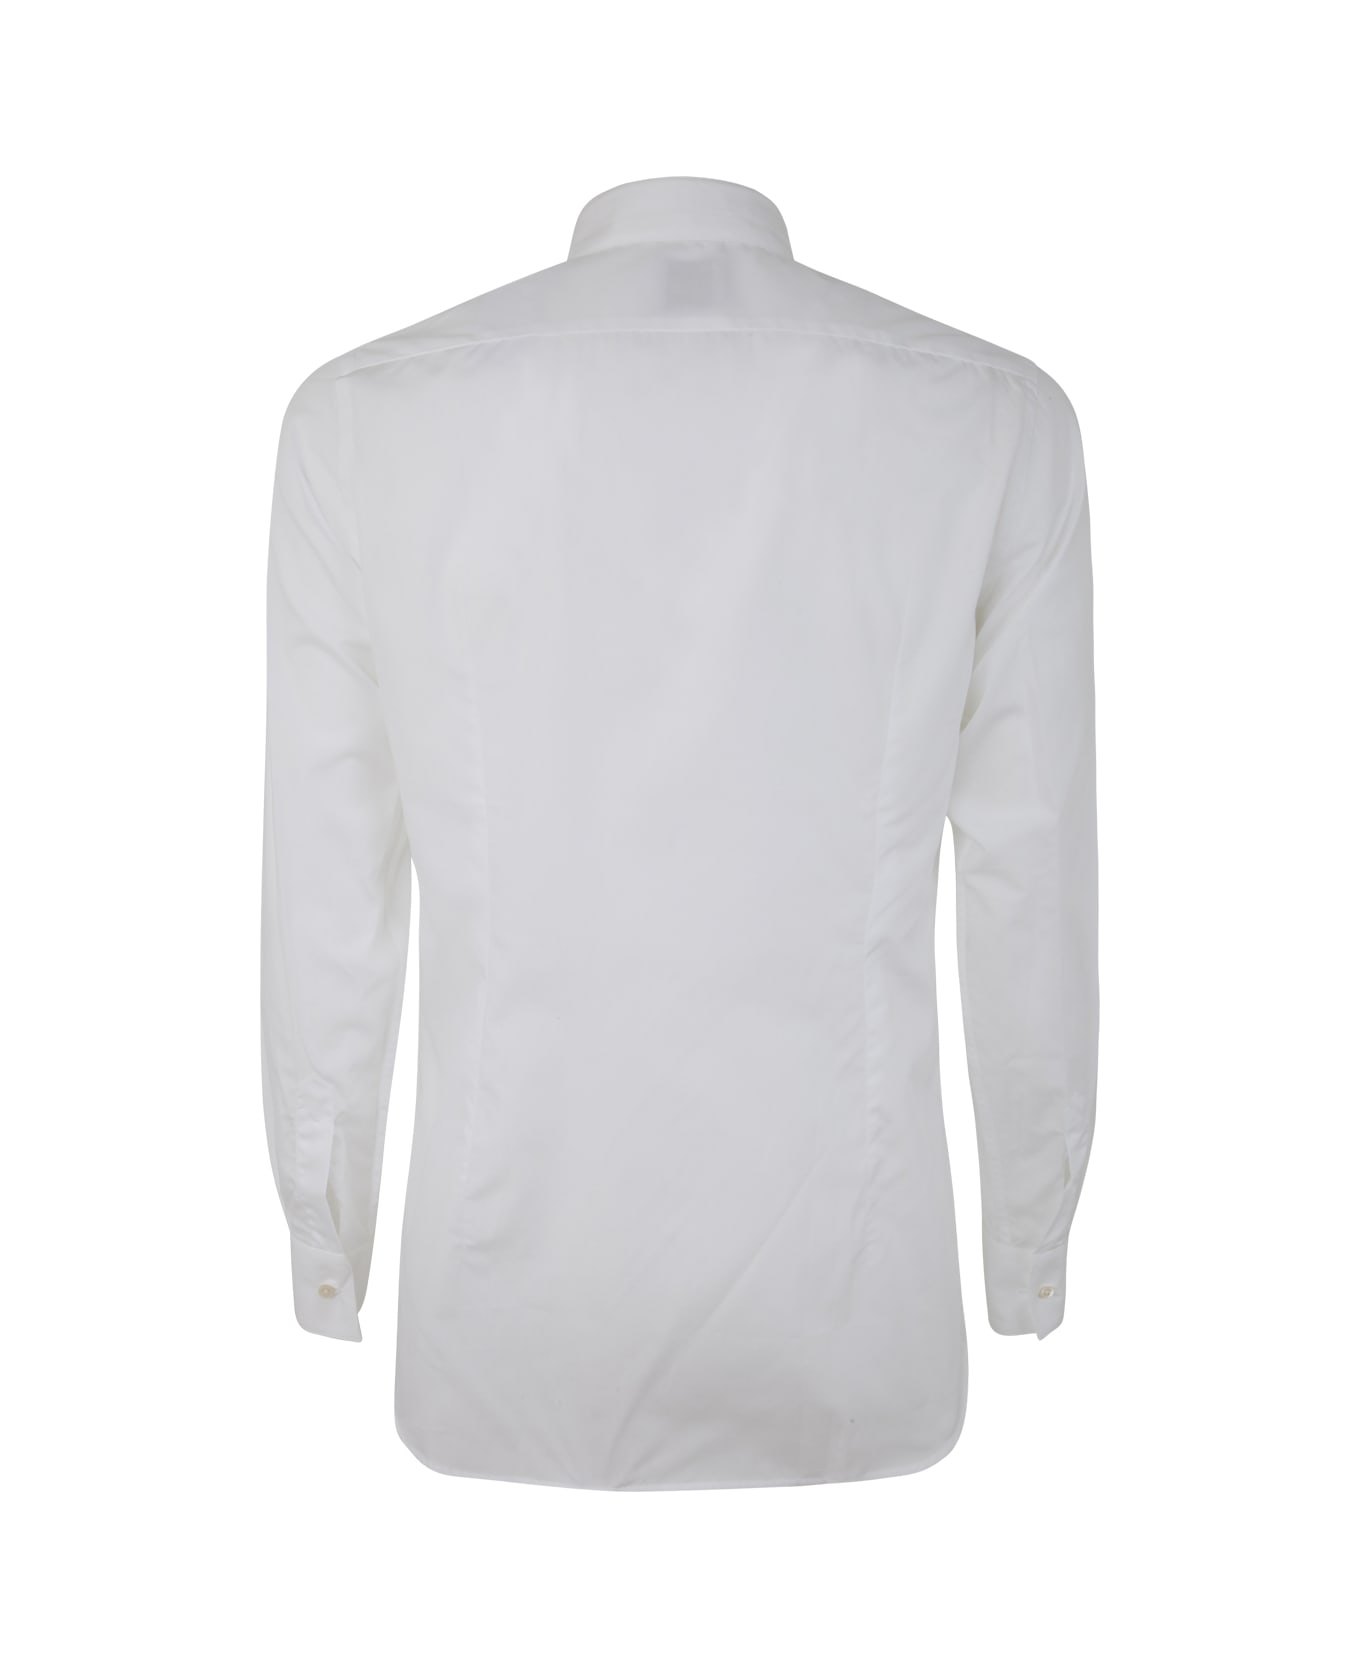 DNL Shirt - White シャツ